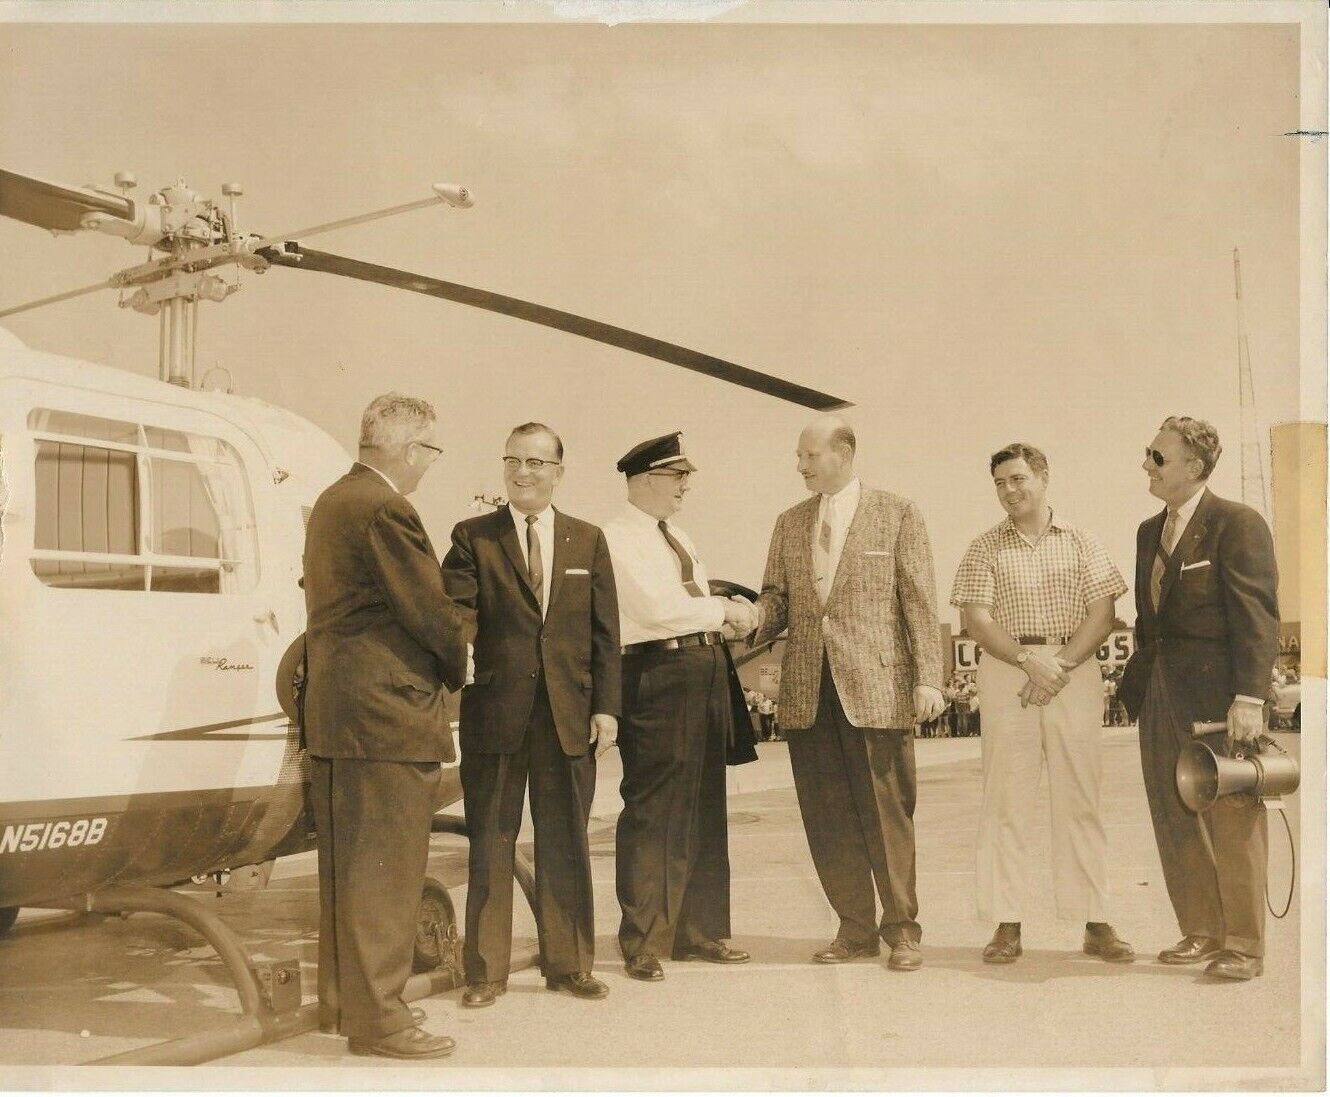 Vintage Original Photo - Politician Meets Men near Helicopter - Buffalo NY Area